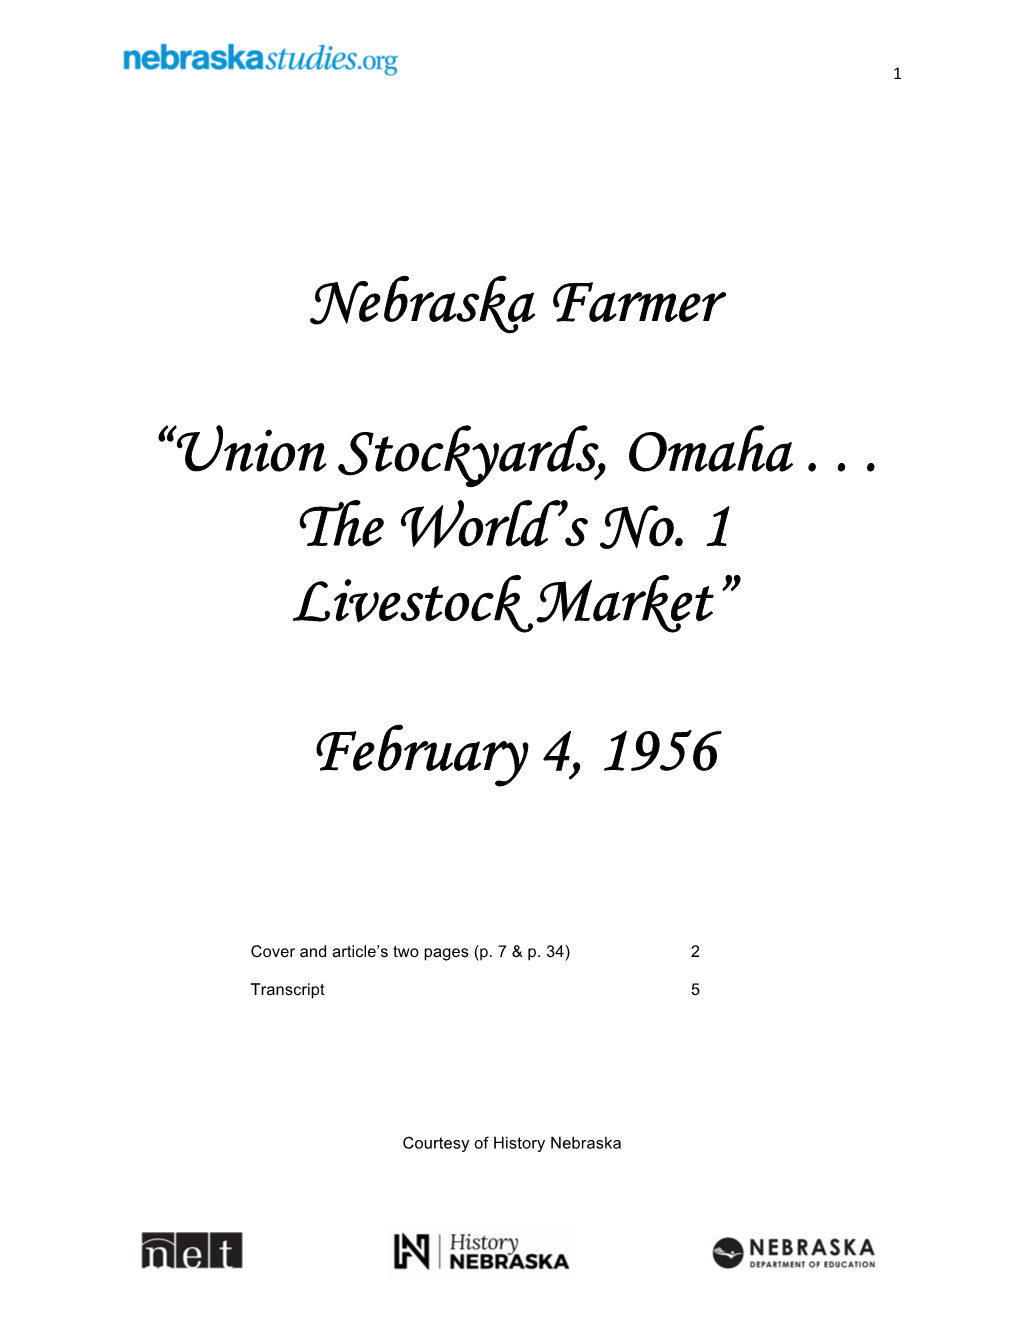 Nebraska Farmer “Union Stockyards, Omaha . . . the World's No. 1 Livestock Market”